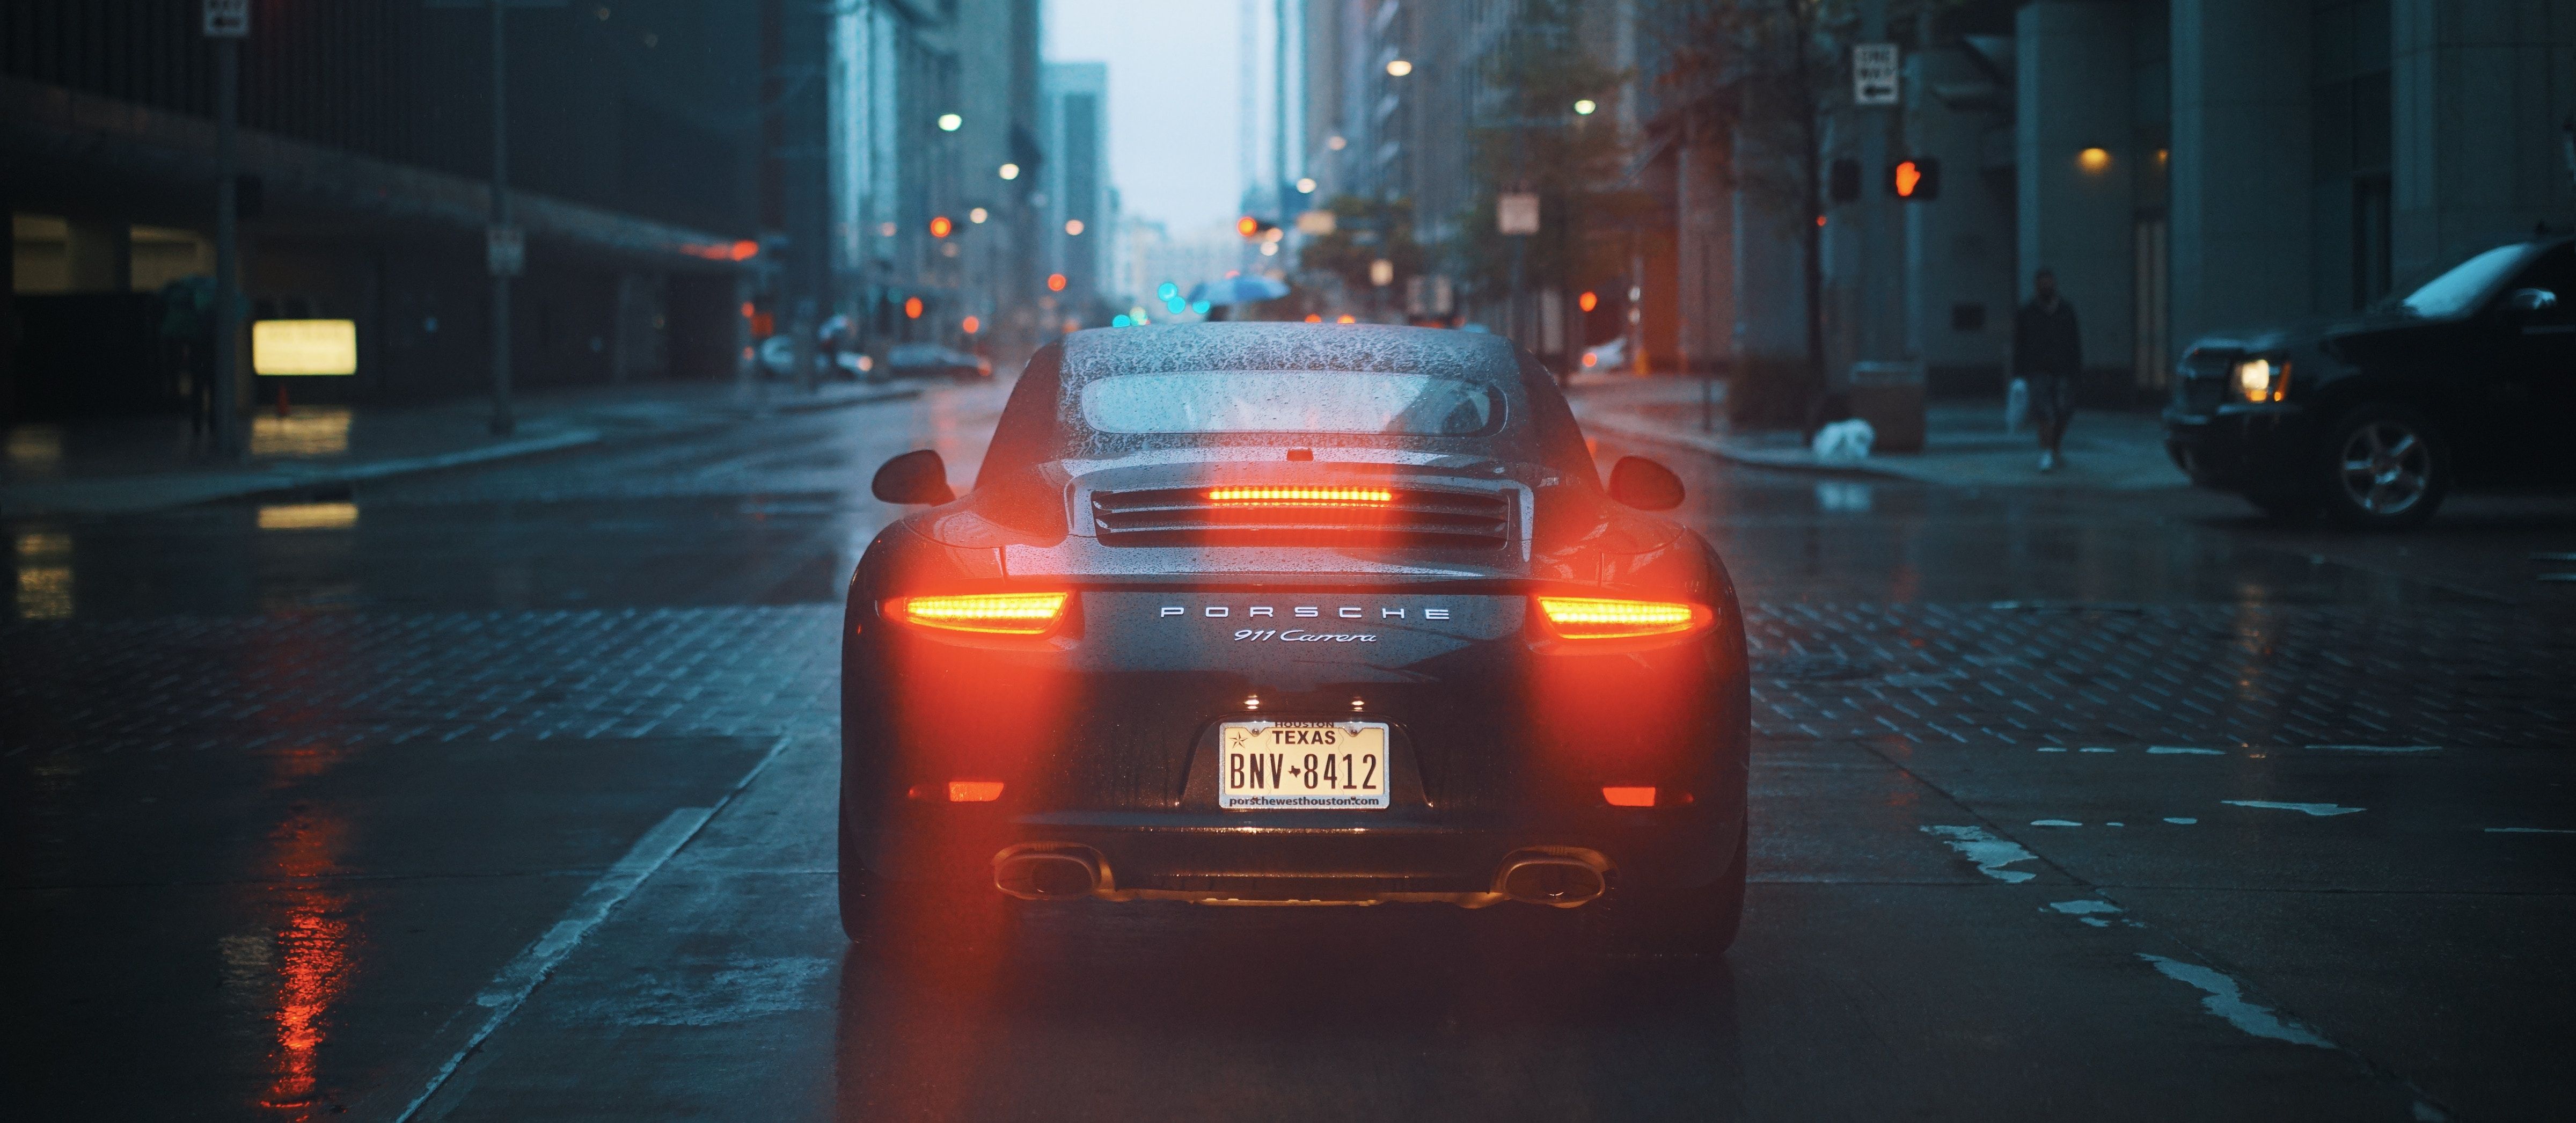 Porsche 911 Carrera Talilights Bokeh Rain City, HD Cars, 4k Wallpaper, Image, Background, Photo and Picture